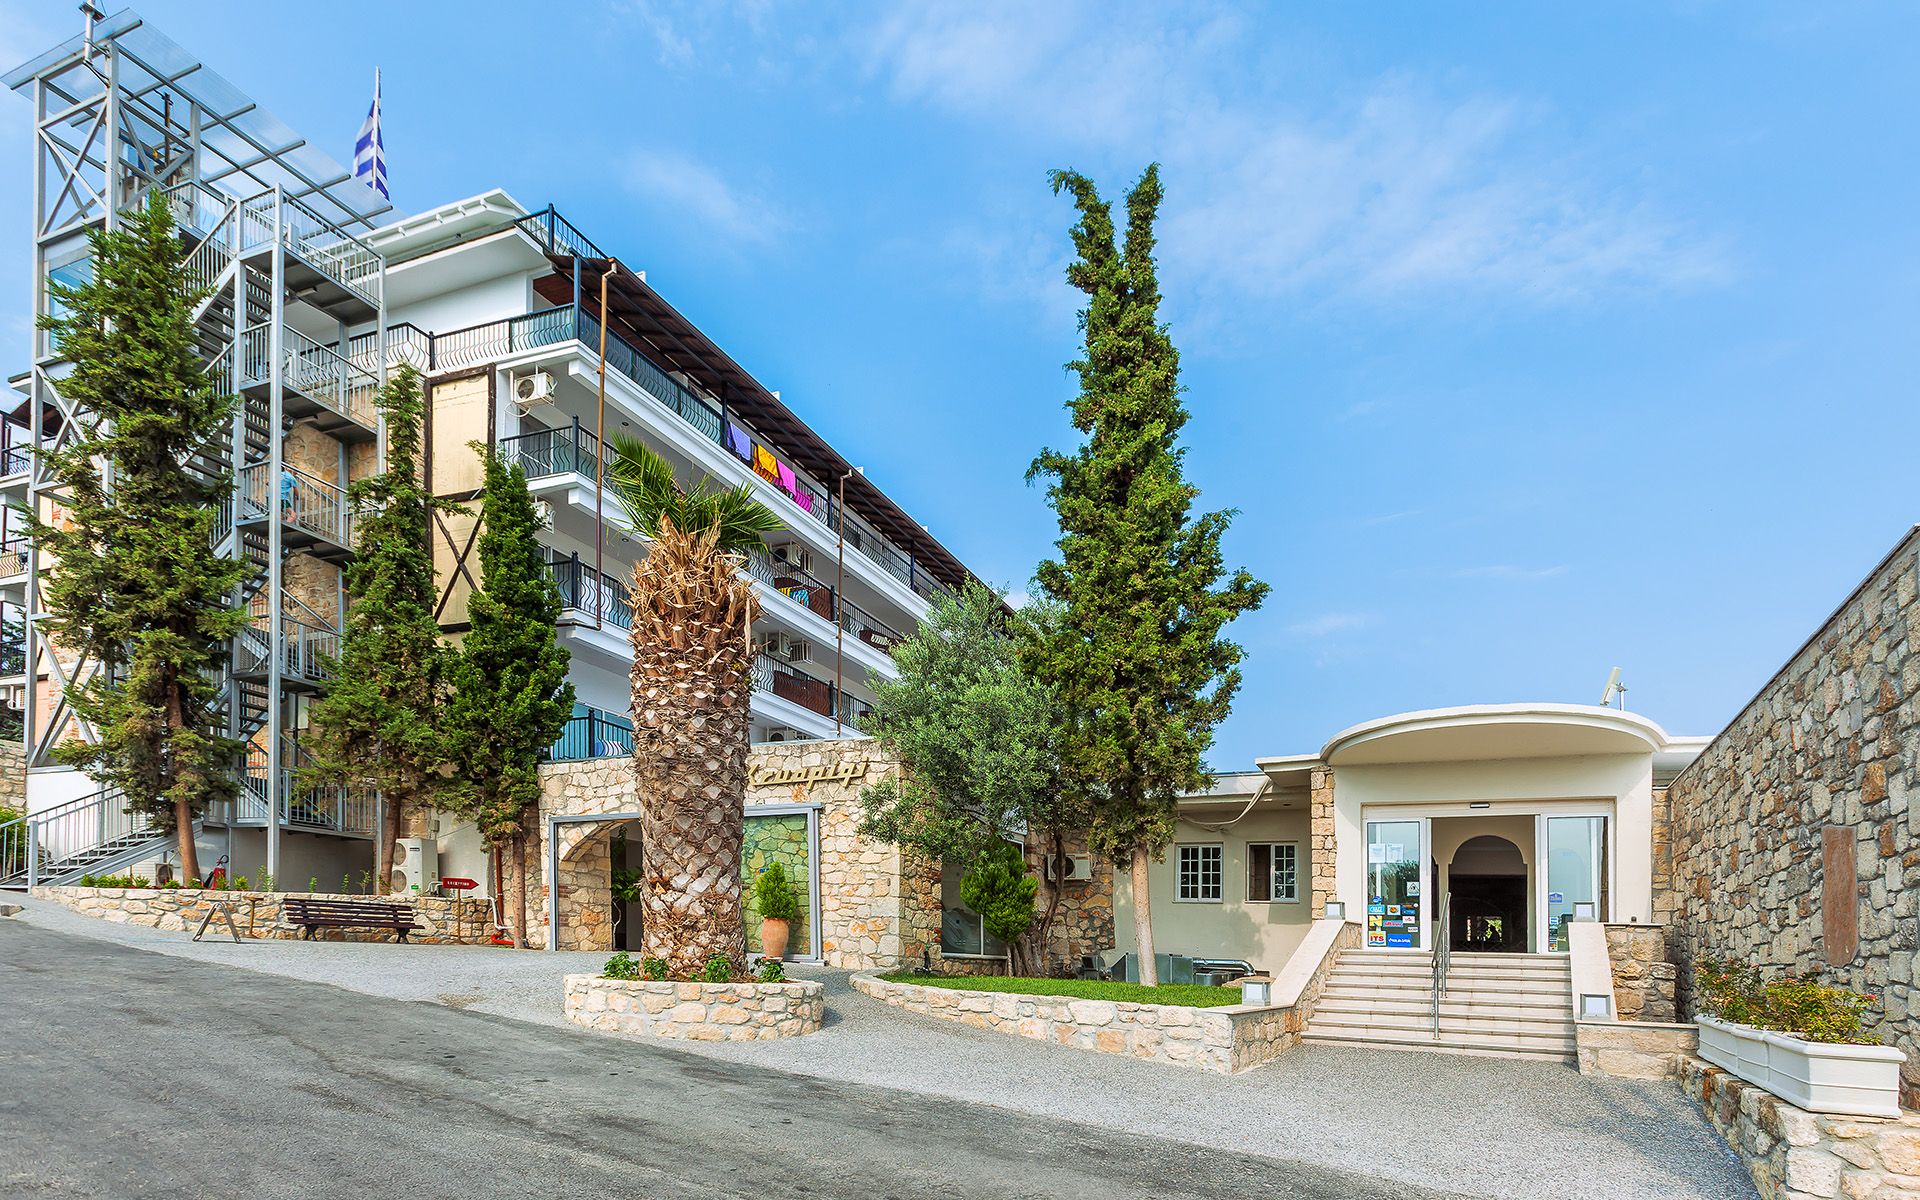 Kriopigi Hotel Chalkidiki